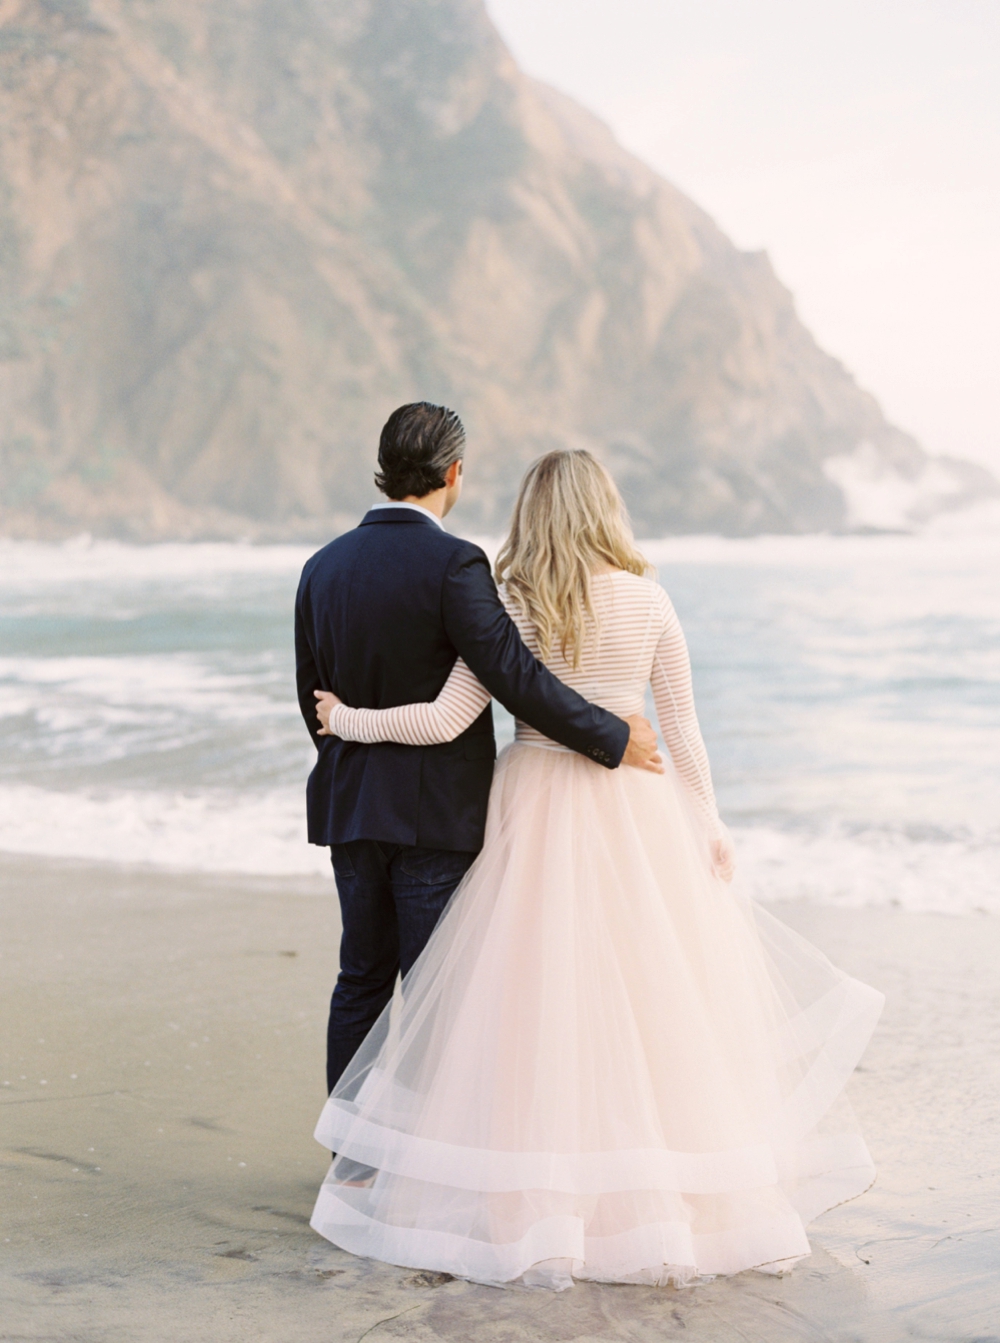 California Wedding Photographer | Bay Area | Big Sur Engagement Photography | Beach Wedding